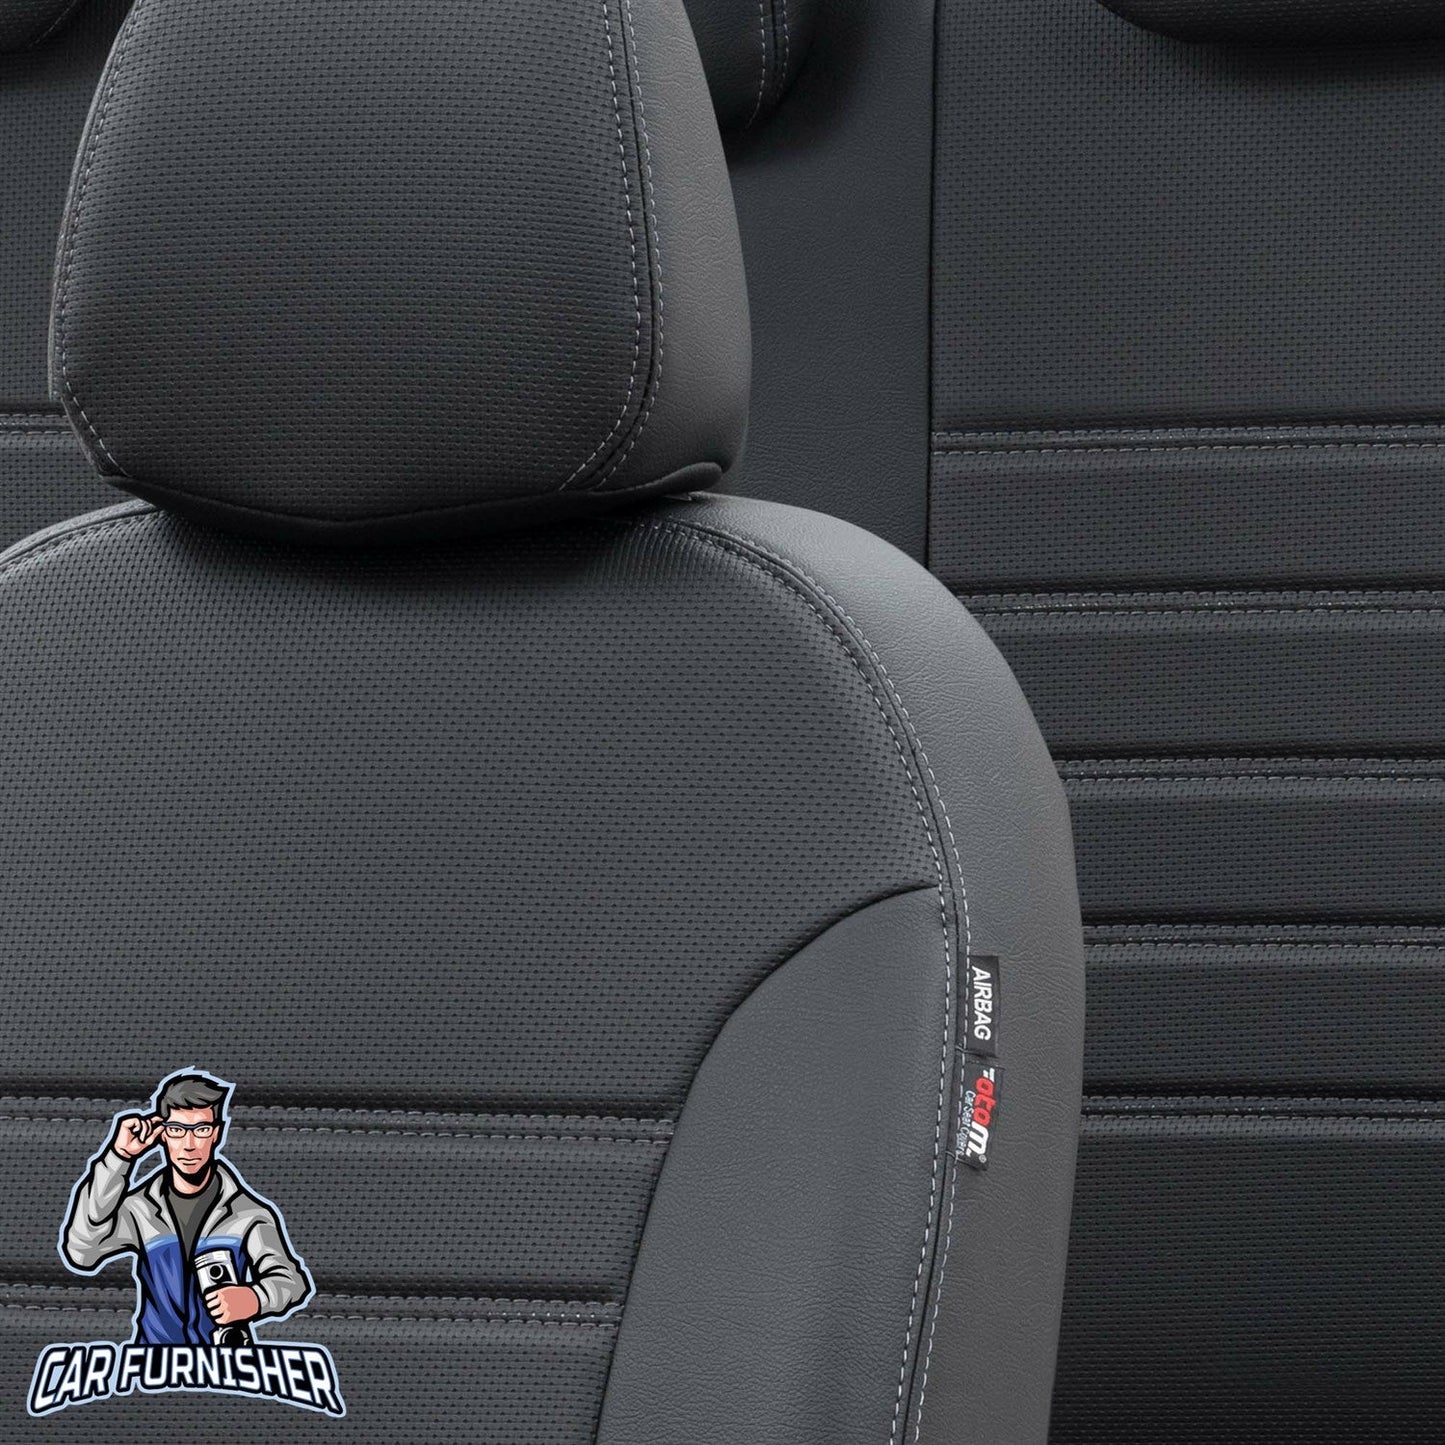 Tesla Model 3 Seat Cover New York Leather Design Black Leather